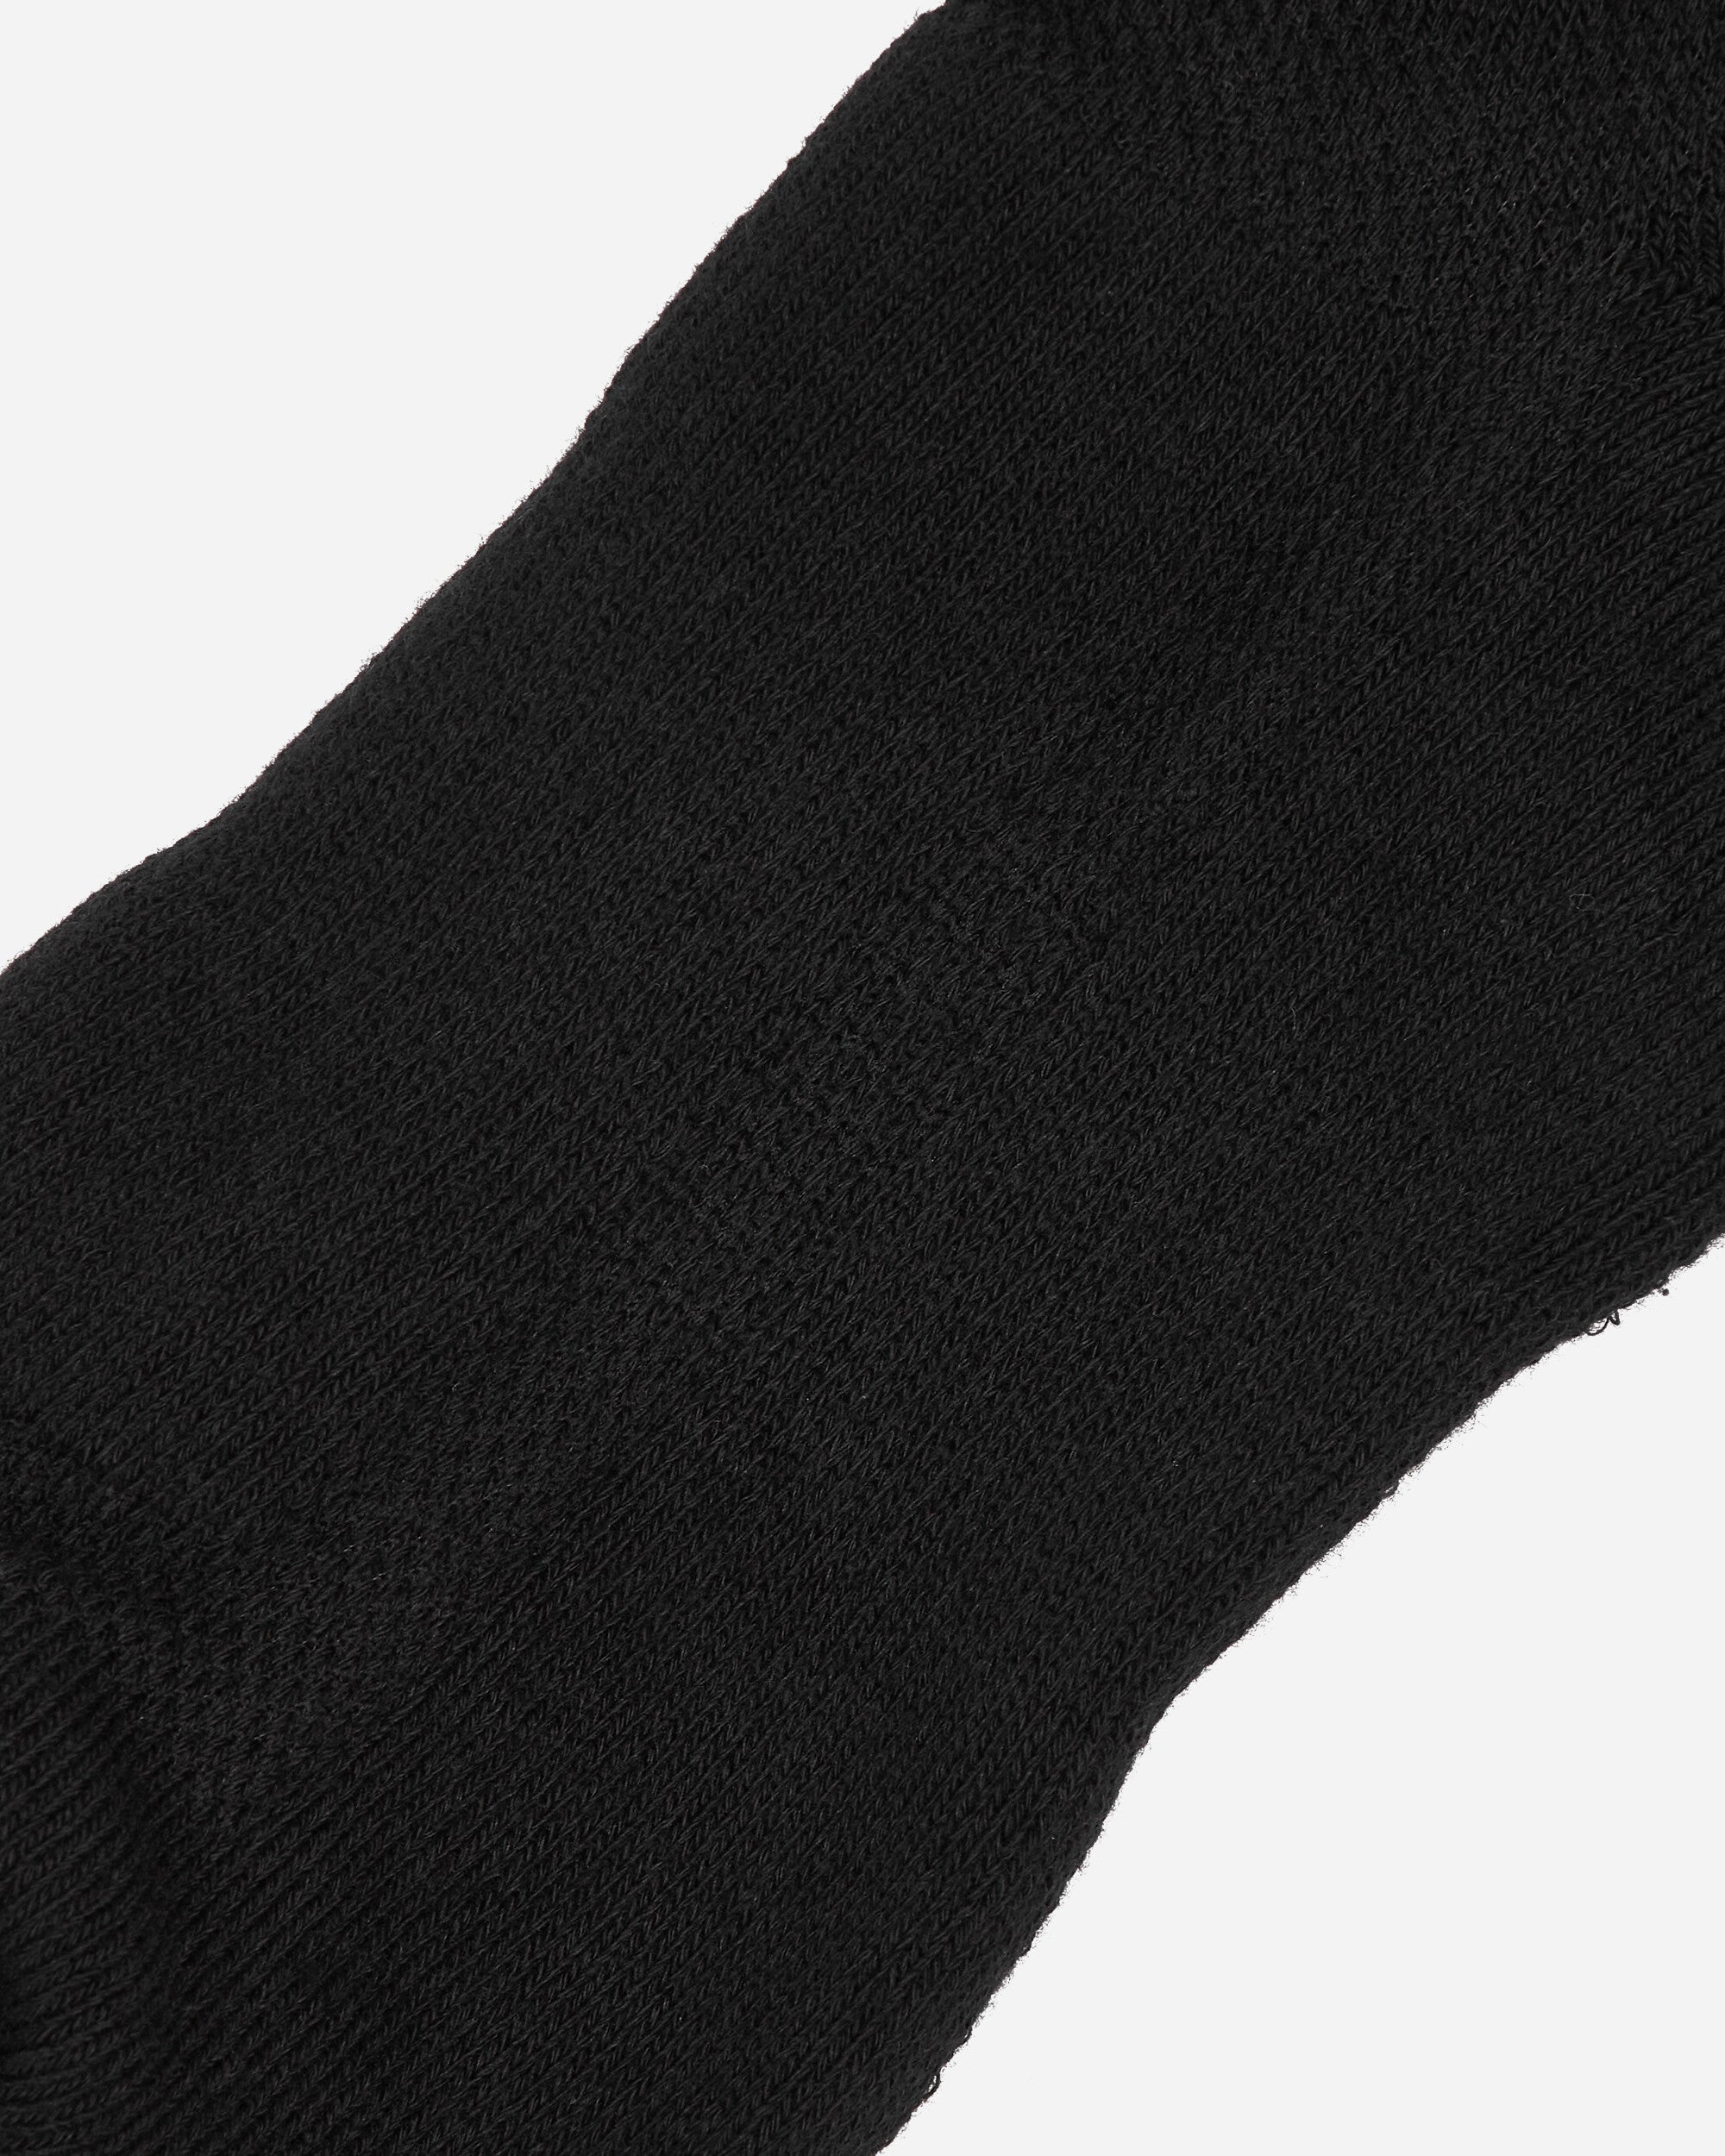 Skivvies Socks Black - 5